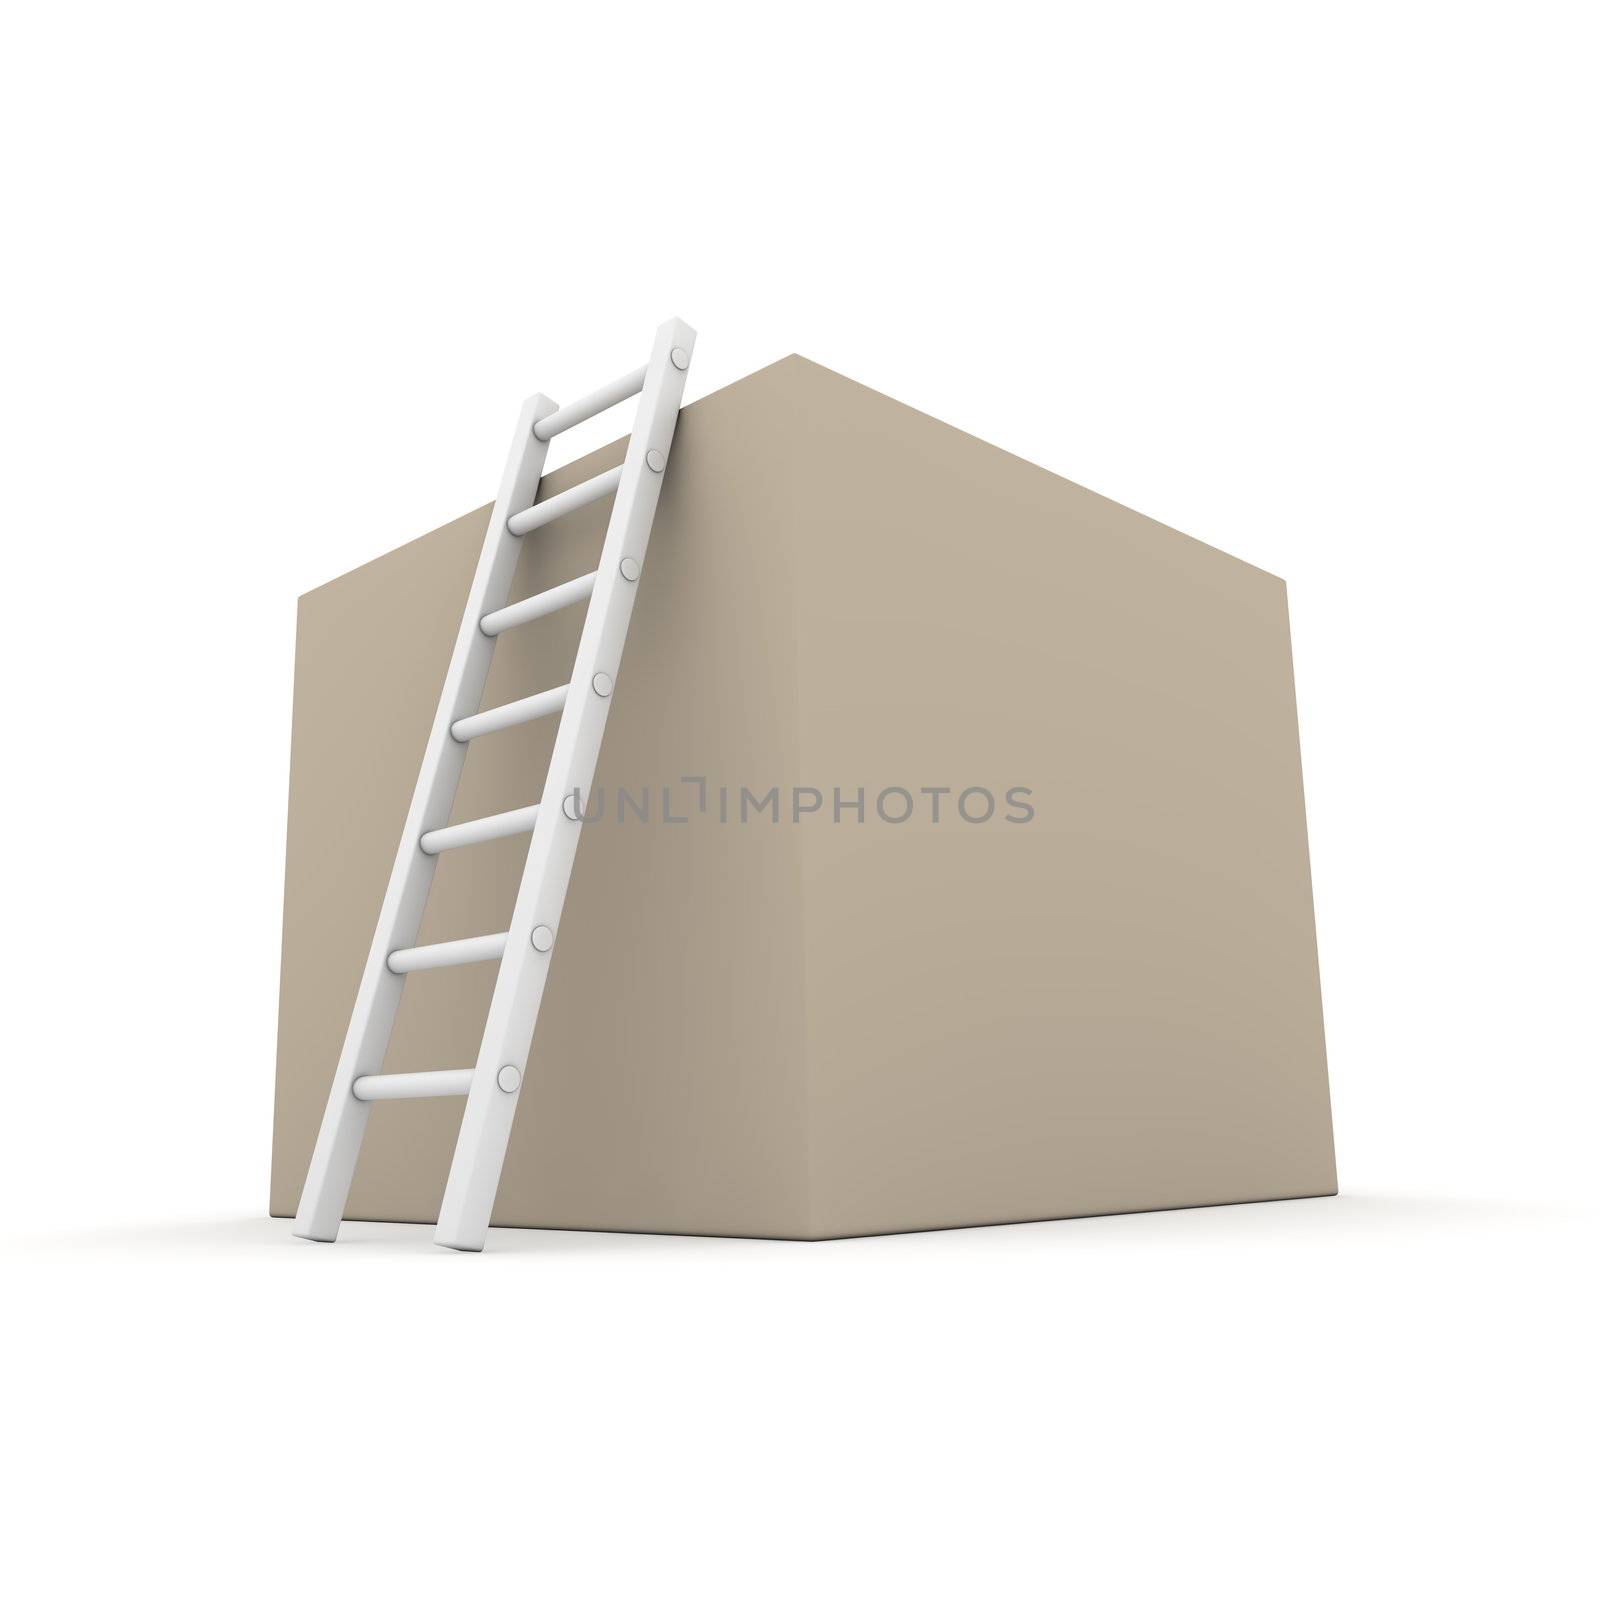 Climb up the Cardboard Box by PixBox